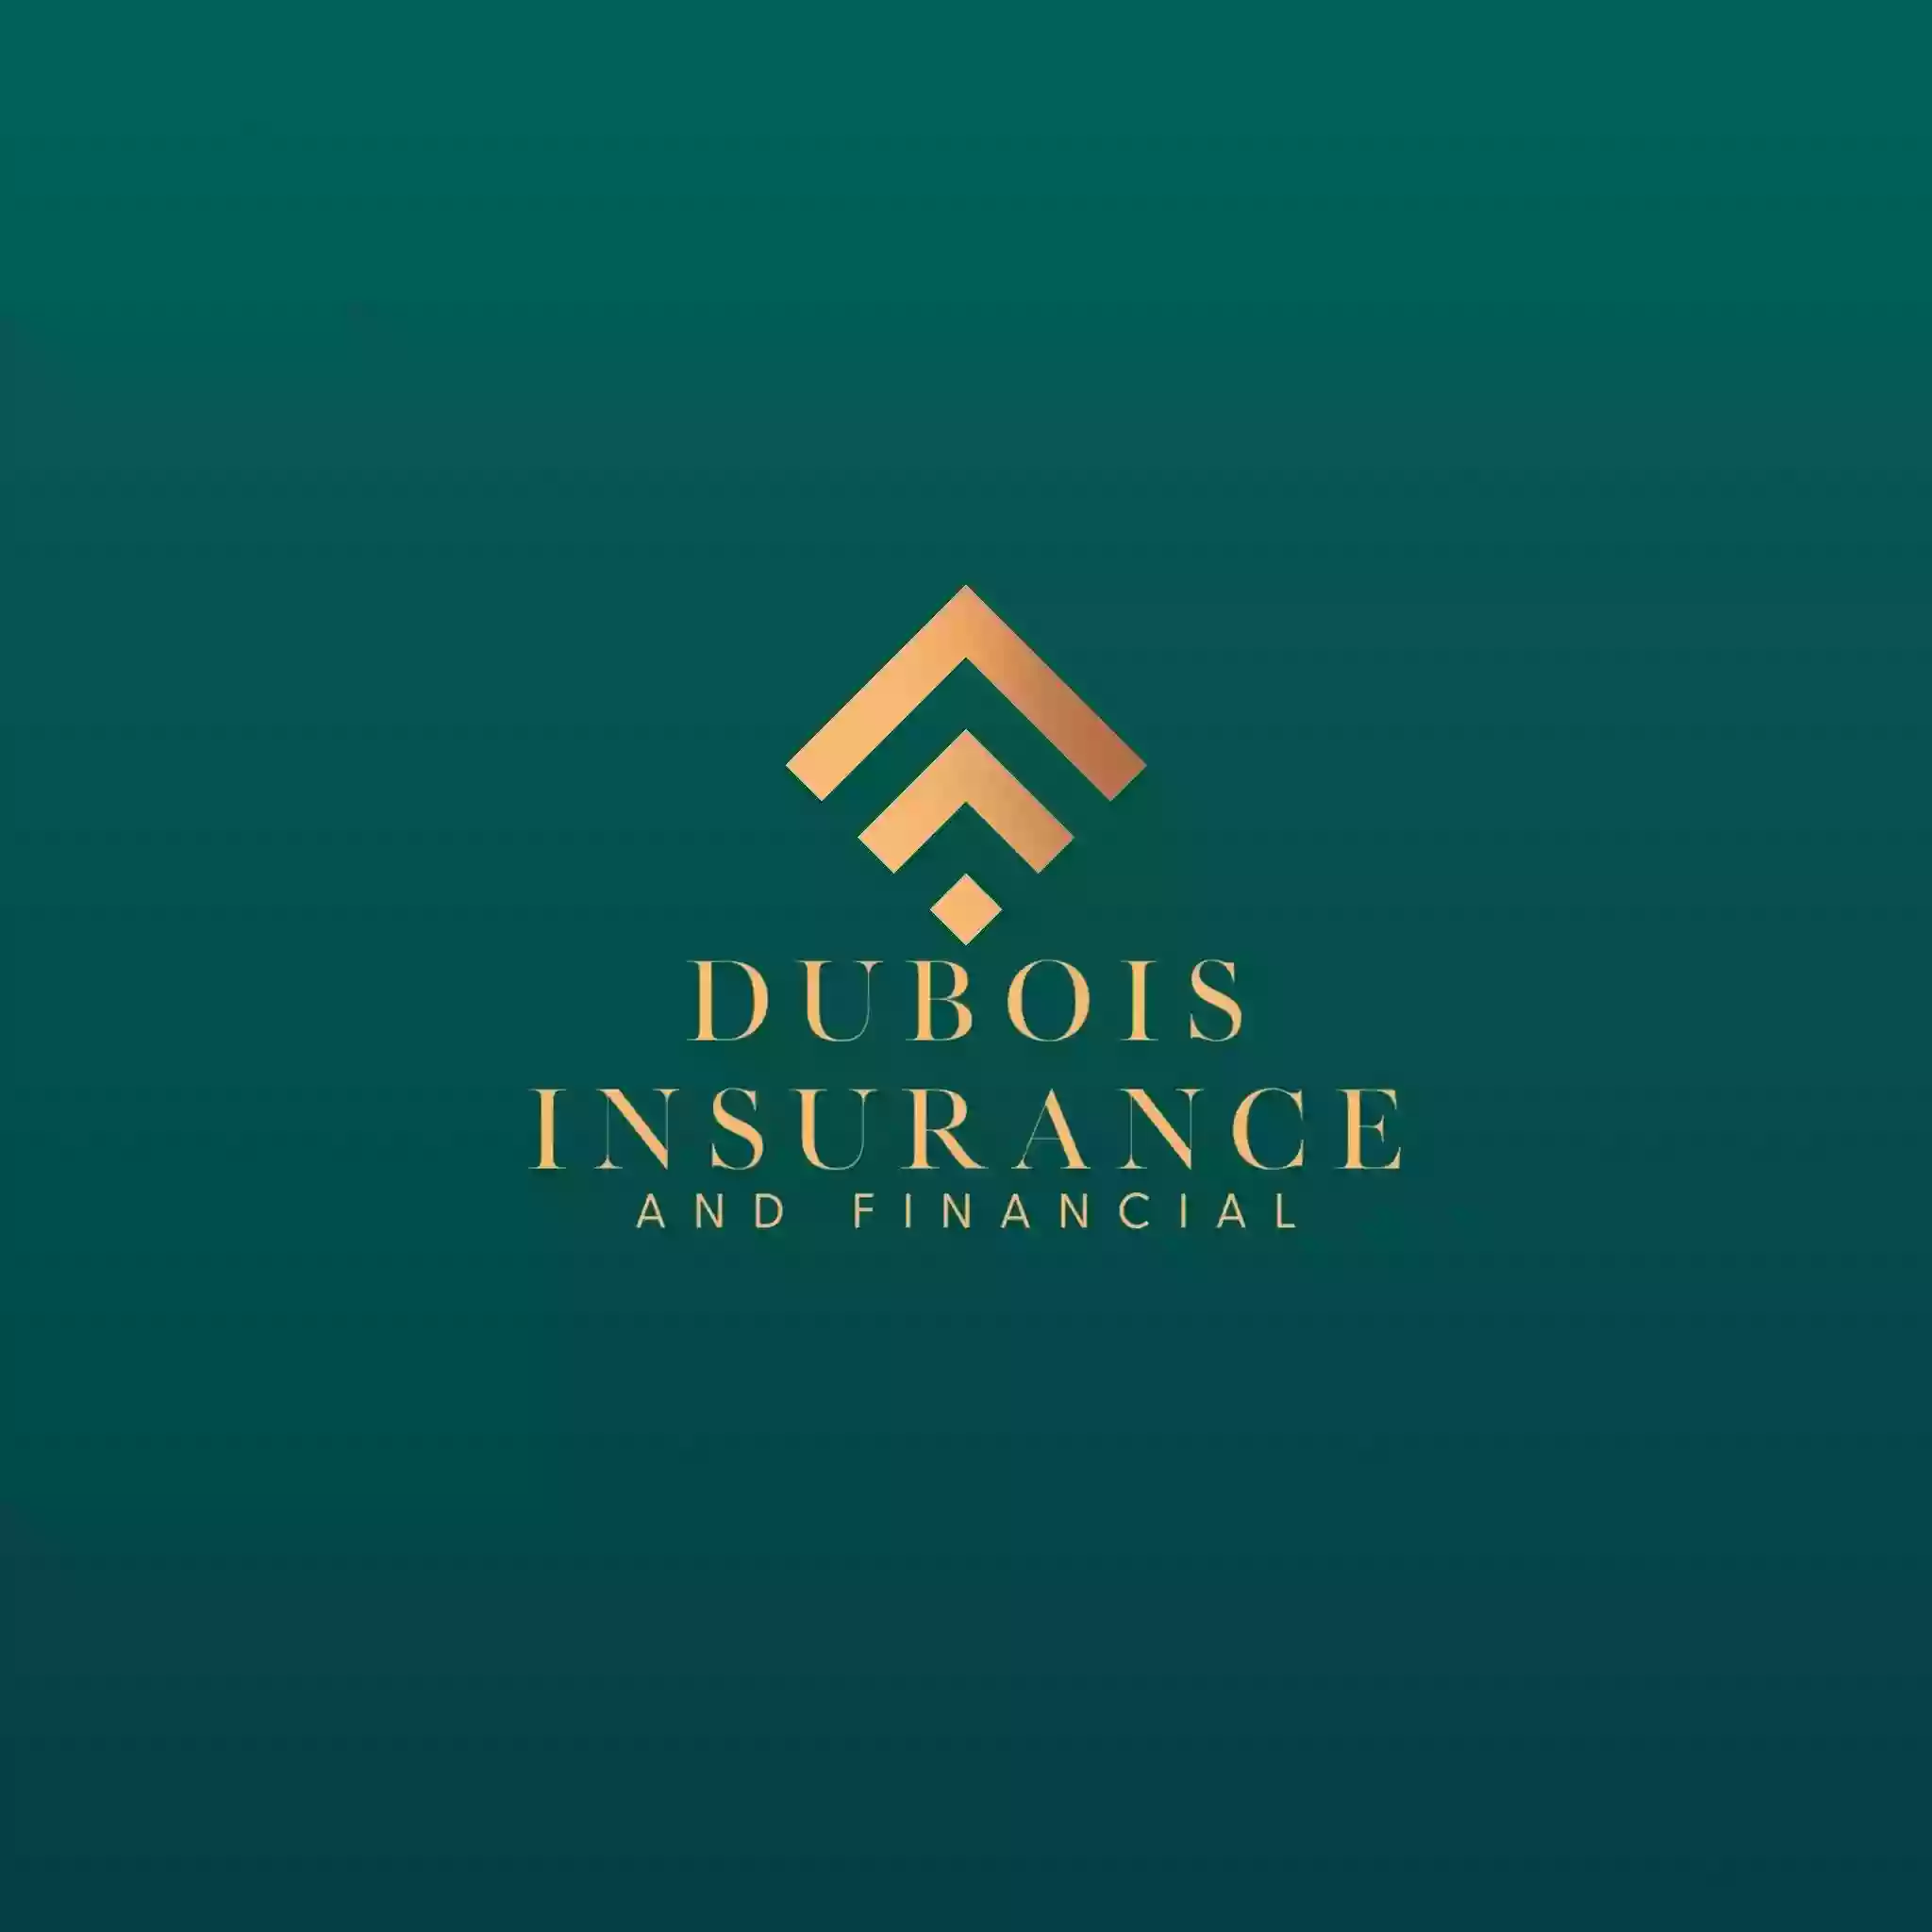 DuBois Insurance Leeona DuBois